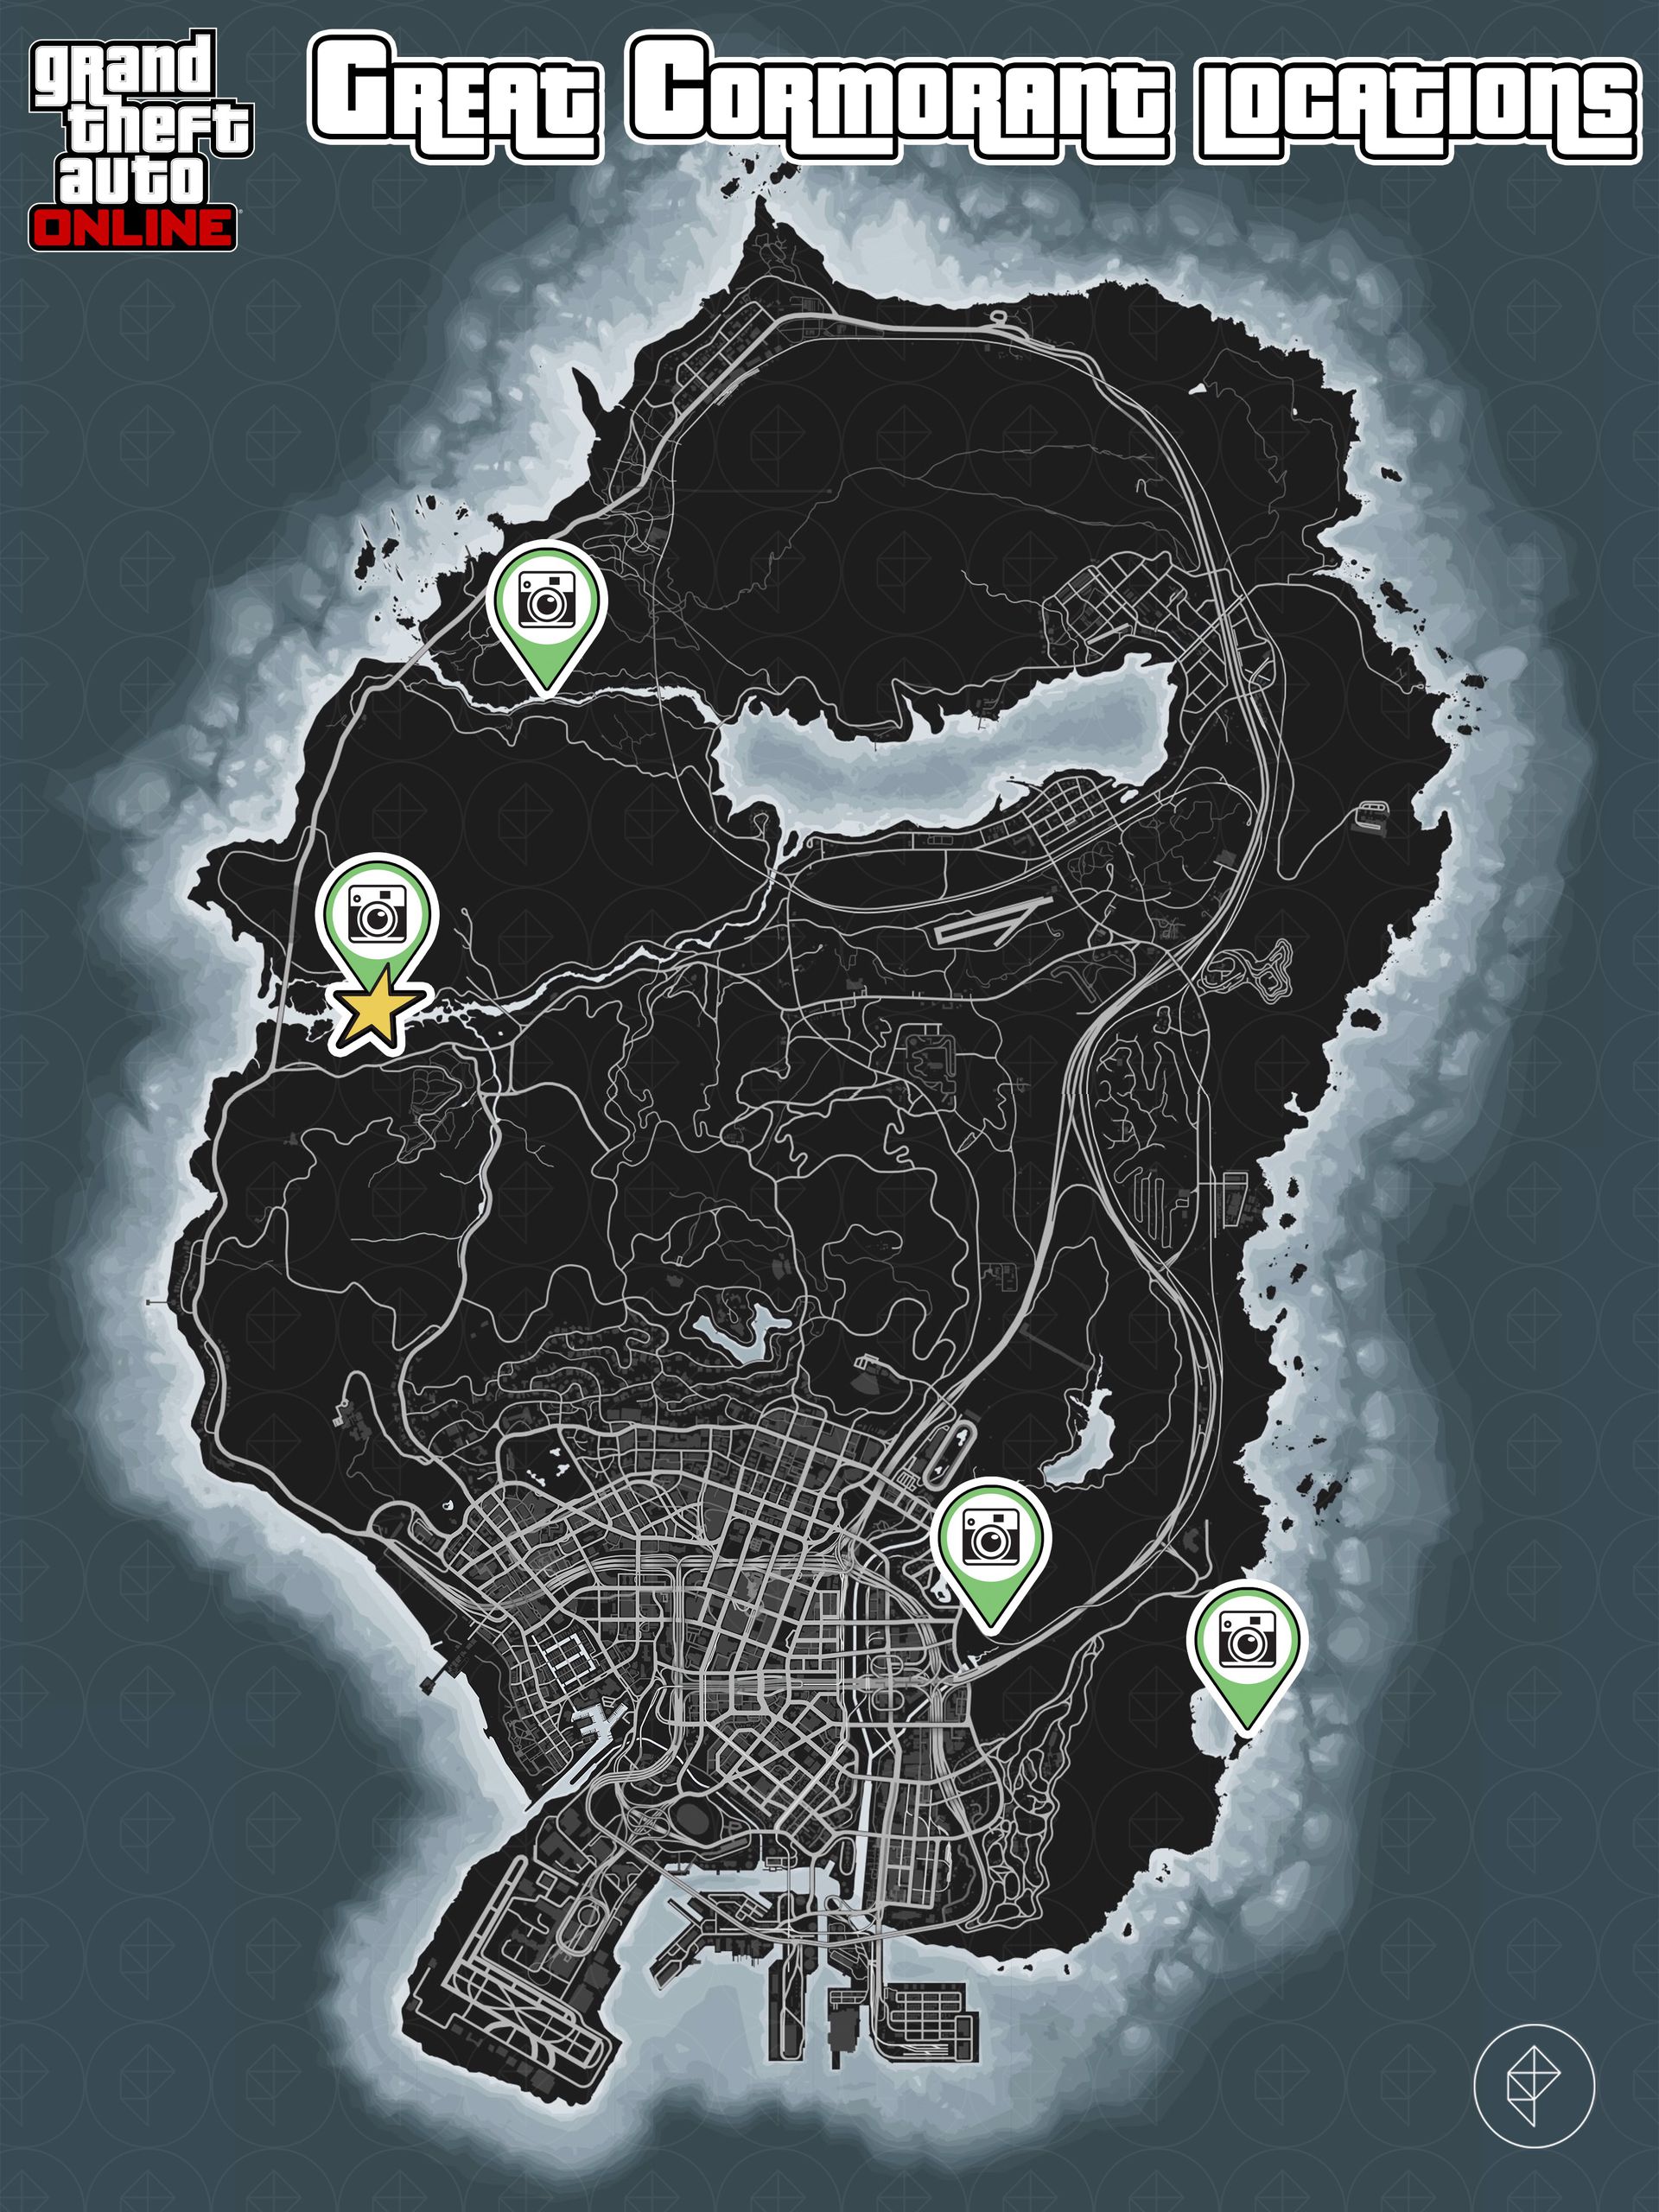 GTA Online map showing great cormorant locations